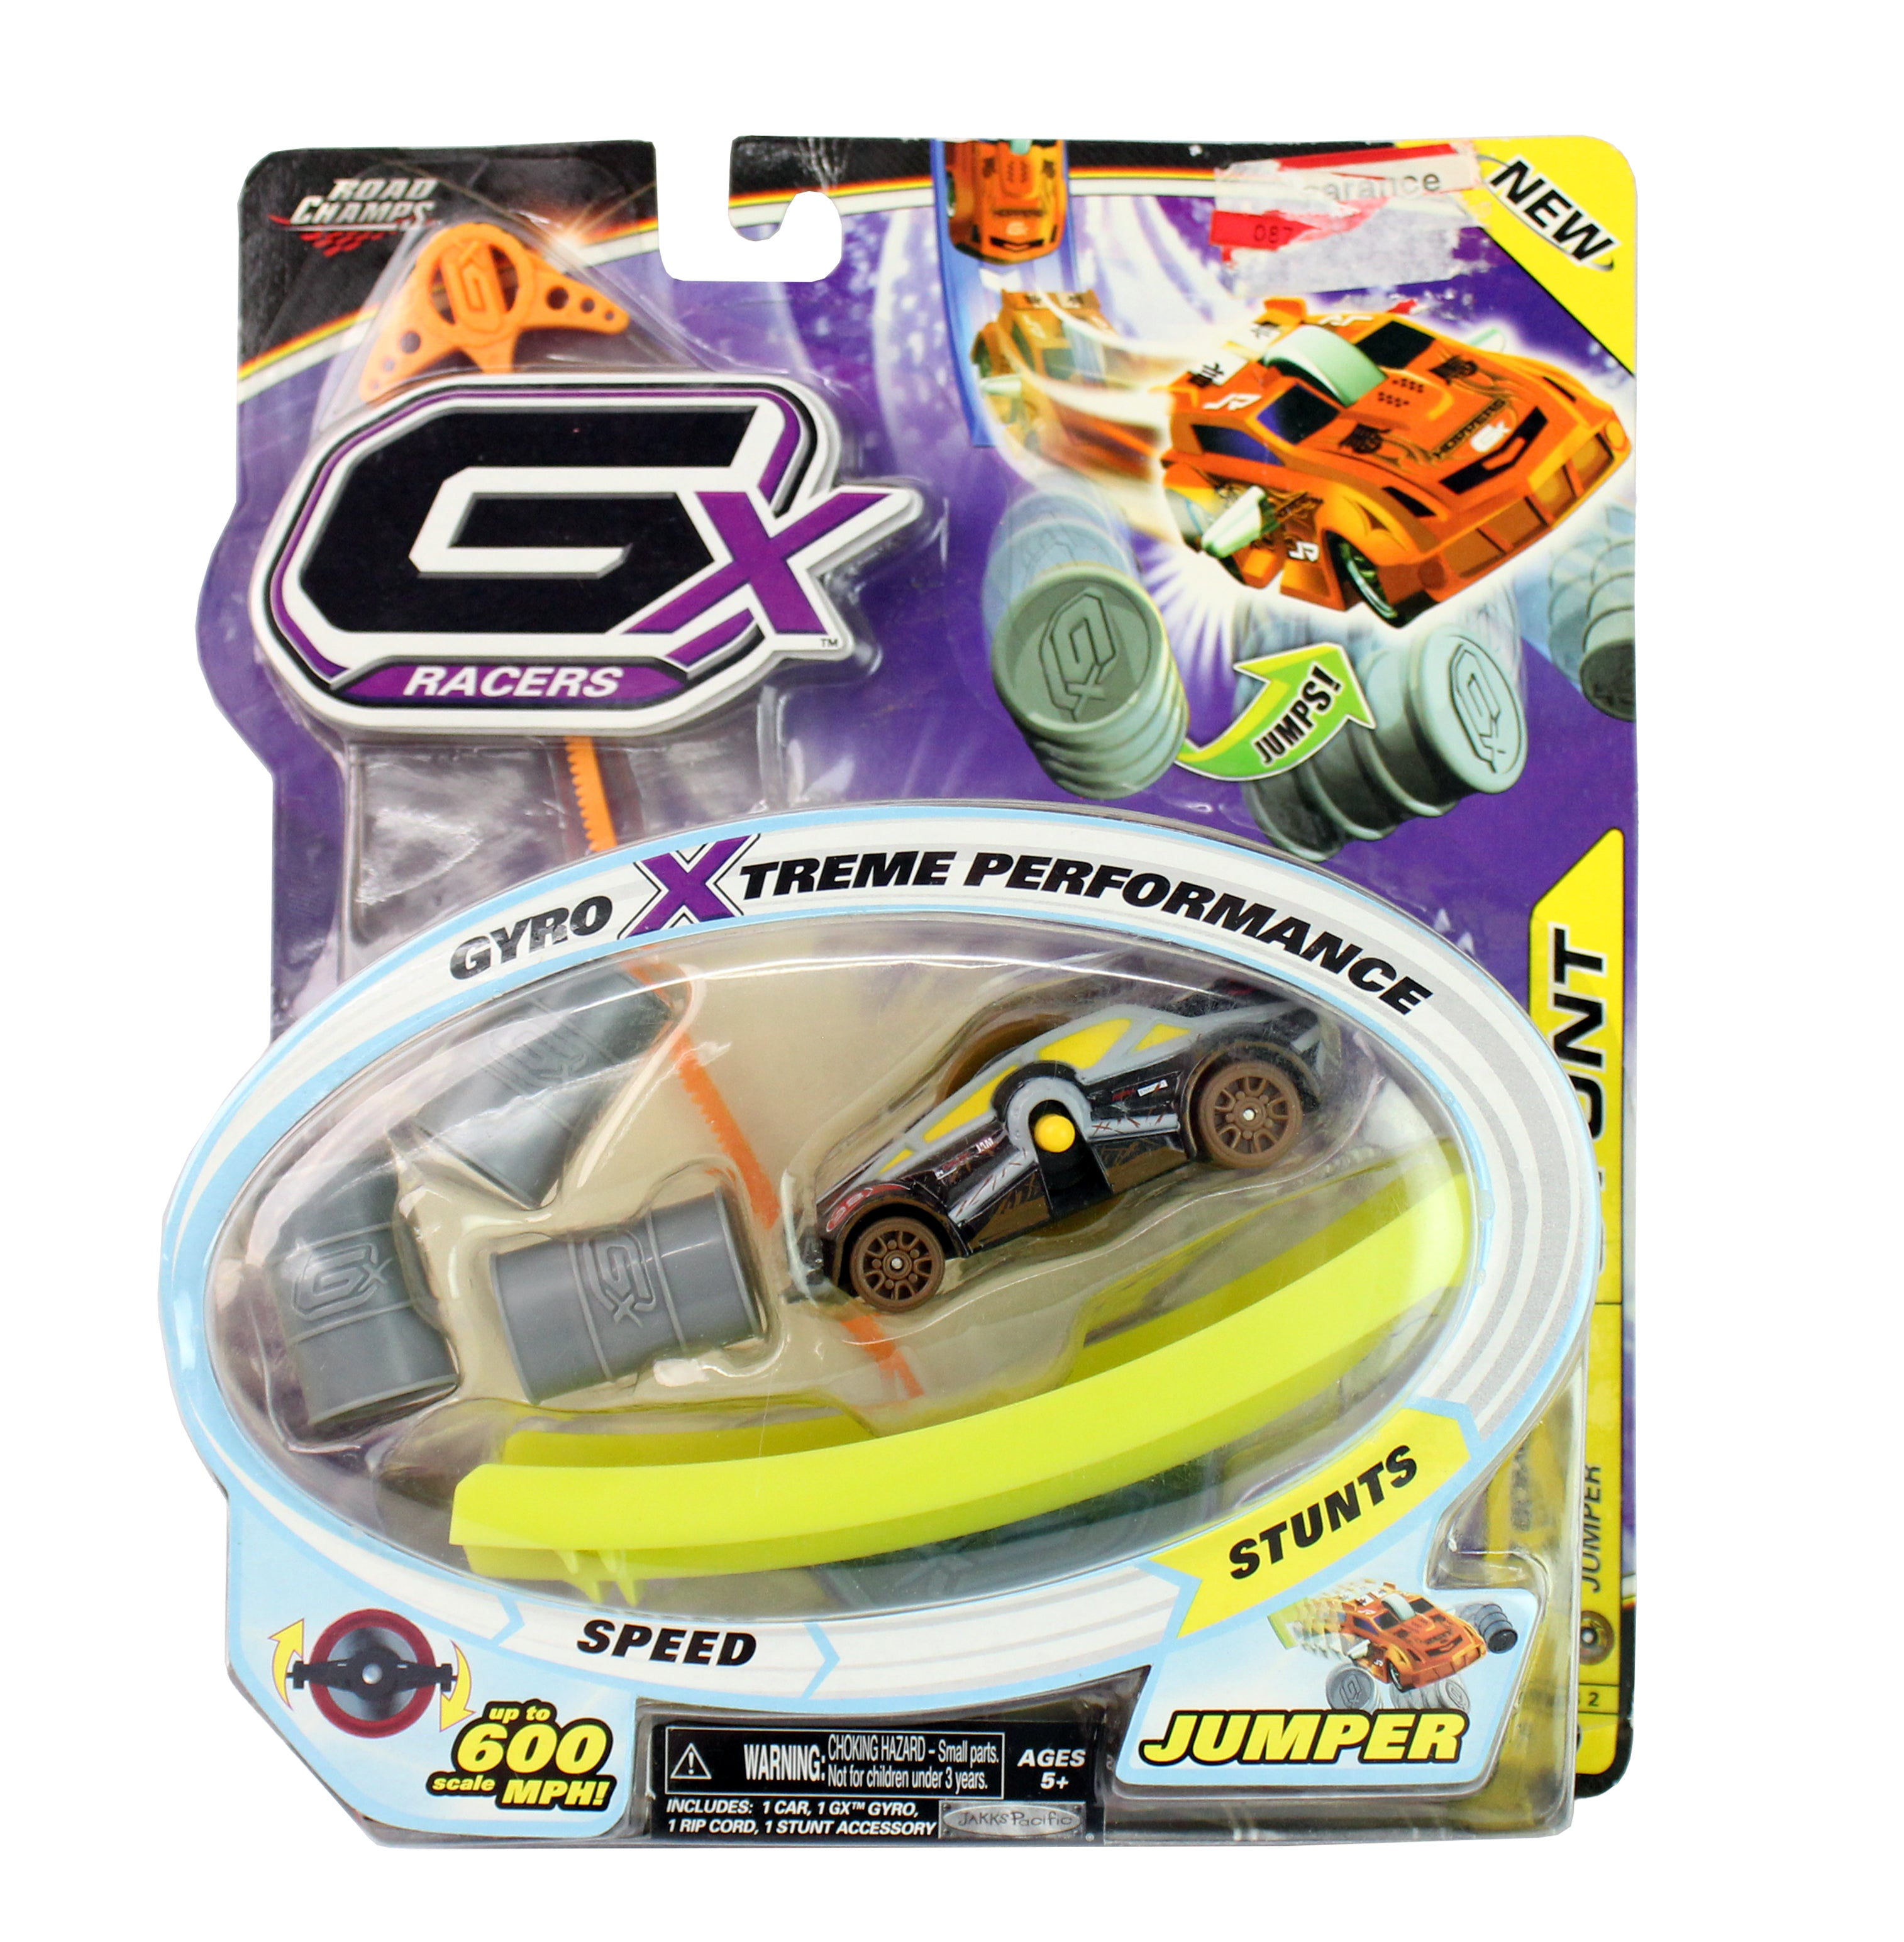 GX Racers Series 2 Dirt Bomber #9 Gyro Extreme Performance W/ Jumper Gyro